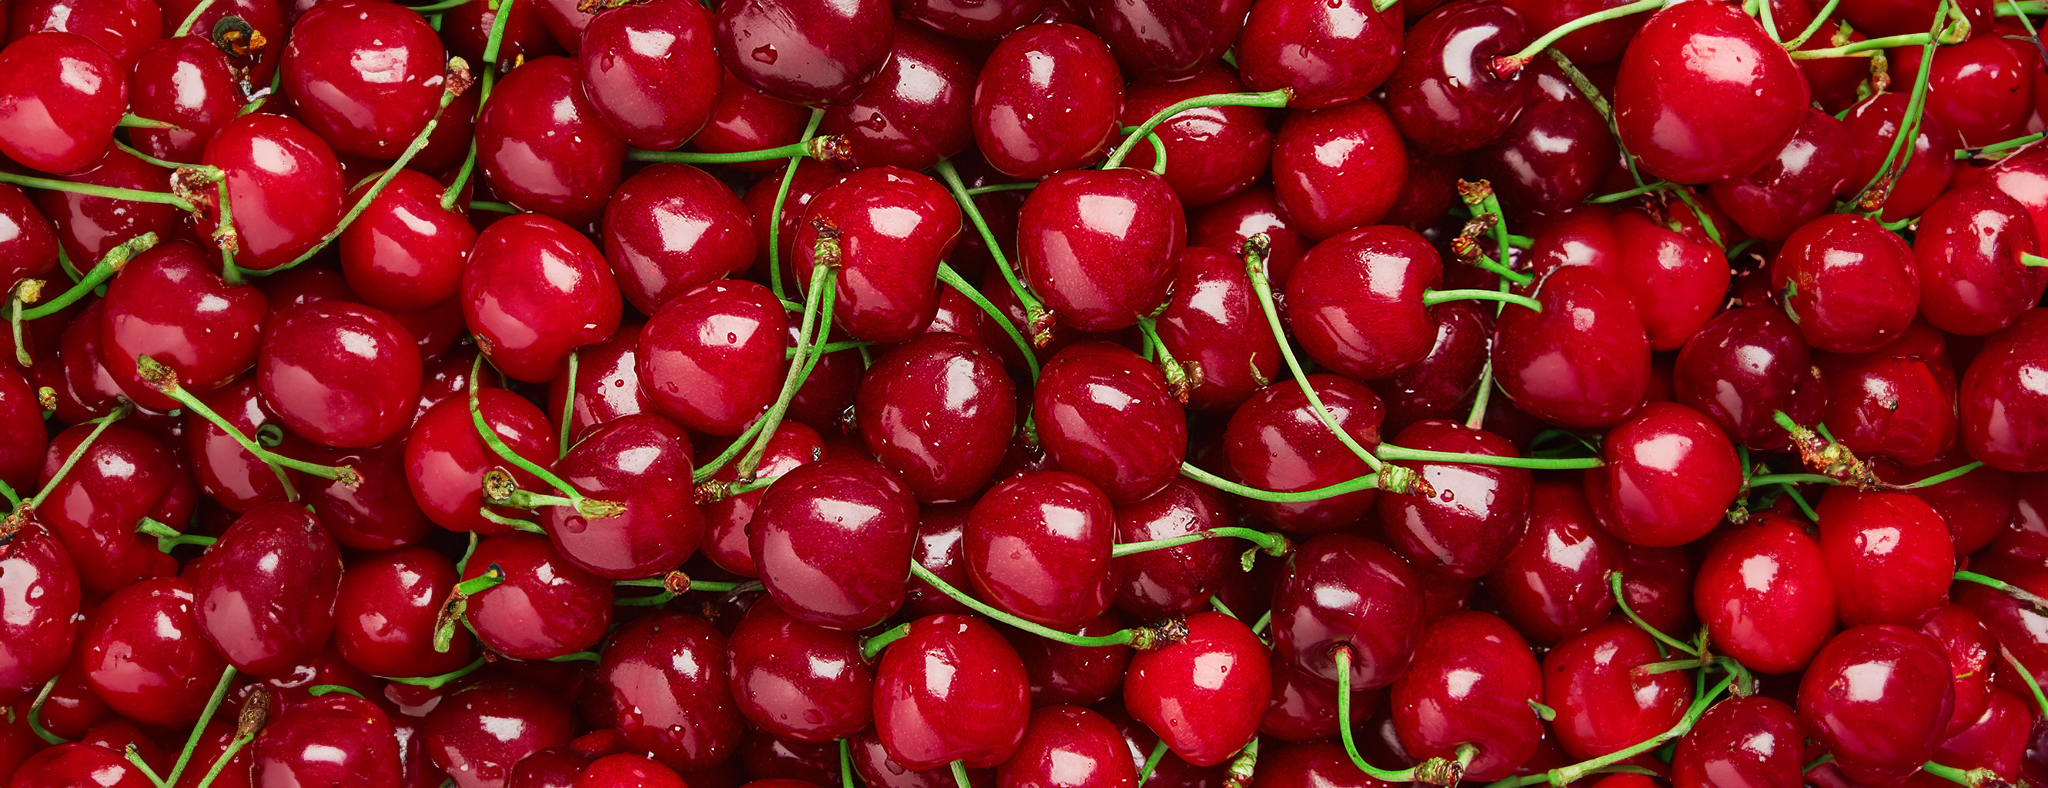 Wholesale cherry in bulk from Turkey